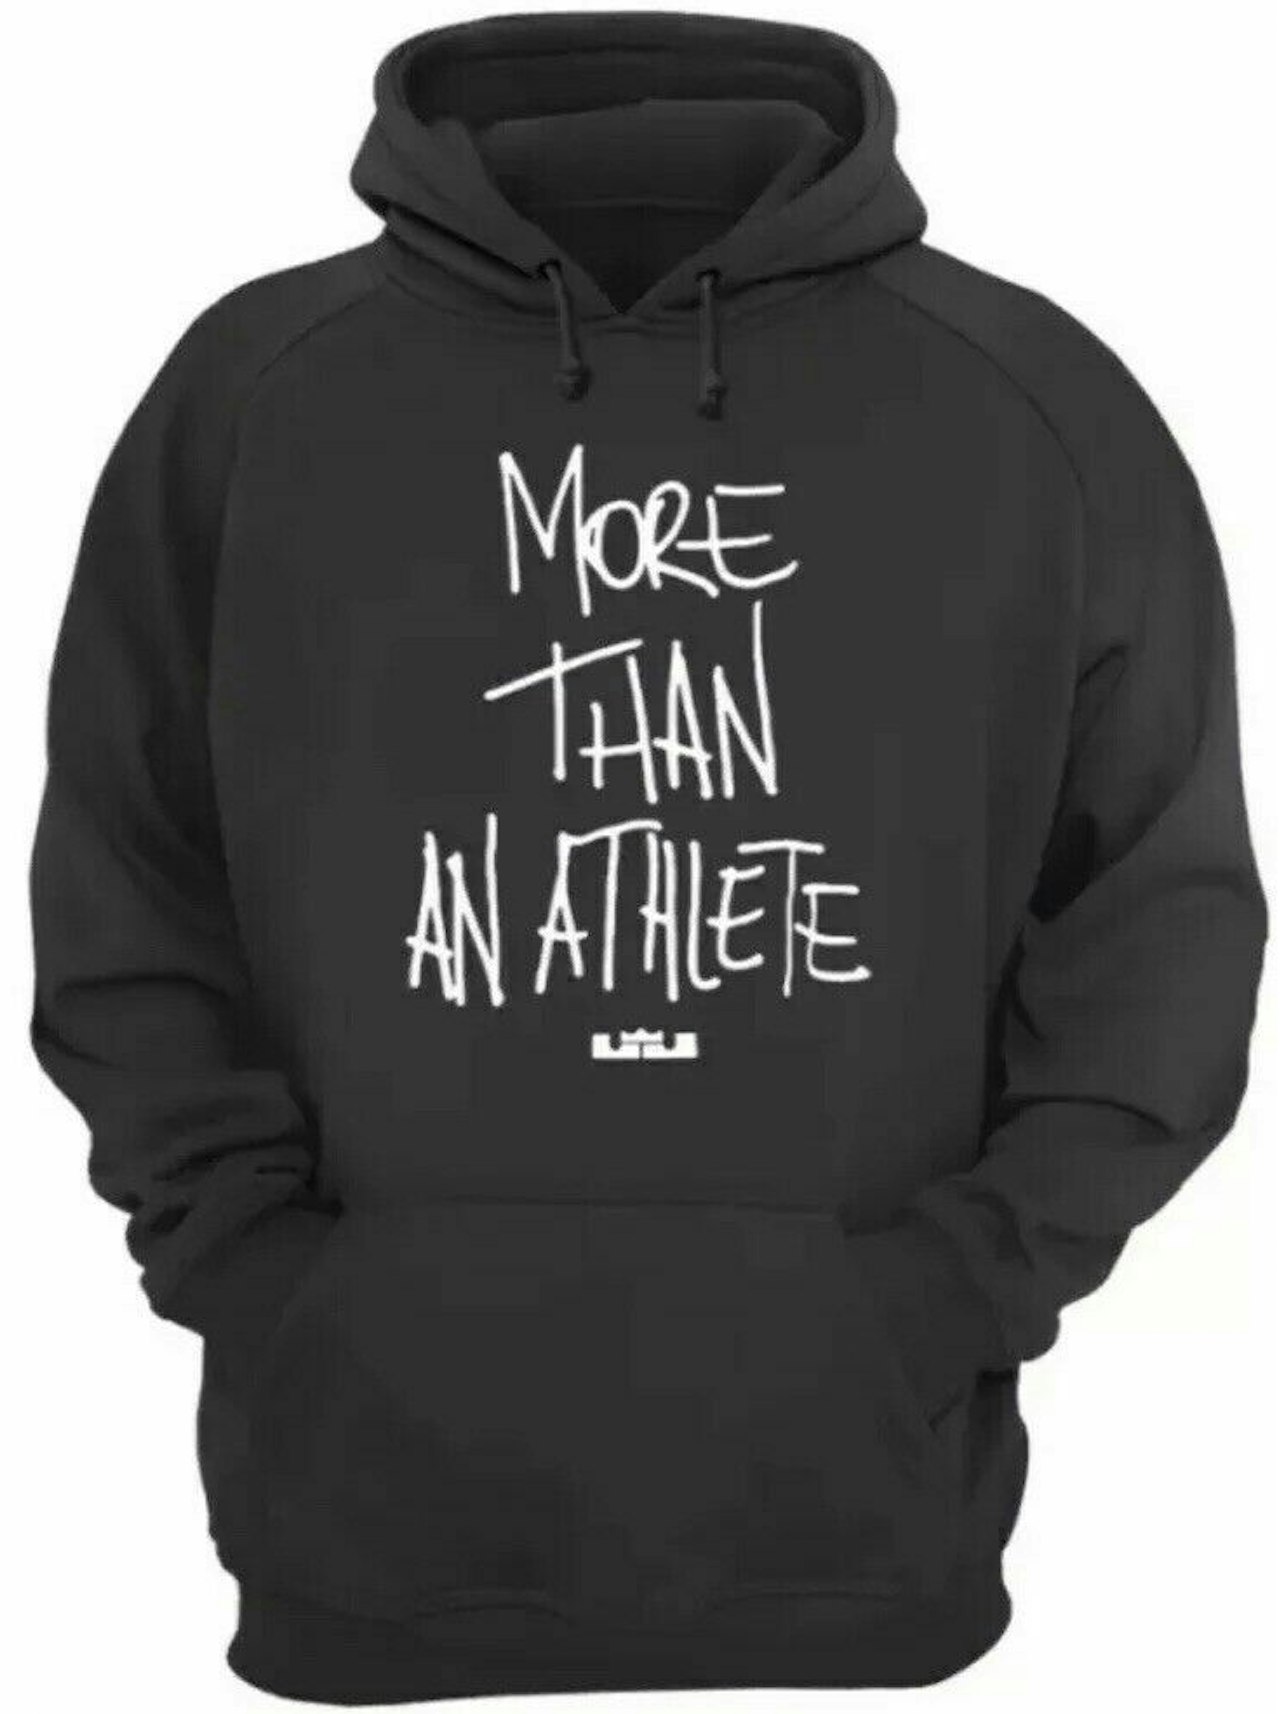 Nike Dri-Fit LeBron James An Athlete Hoodie Black Men's - US